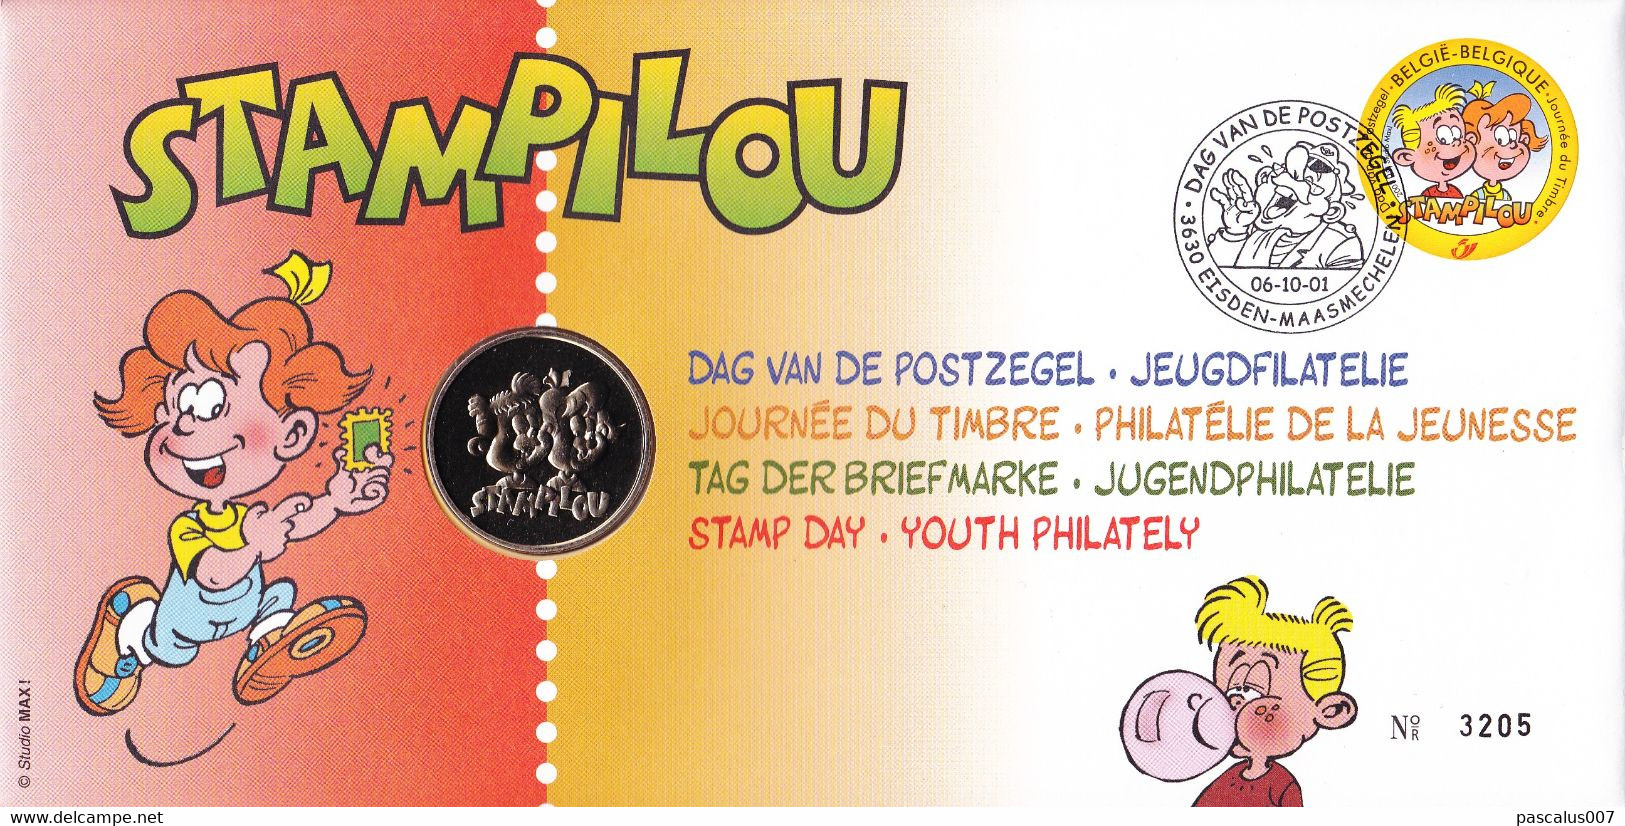 B01-232 3023  BD FDC Numisletter Rare Stam Et Pilou StamPilou 6-10-2001 3630 Eisden-Maasmechelen 20€ - Numisletters